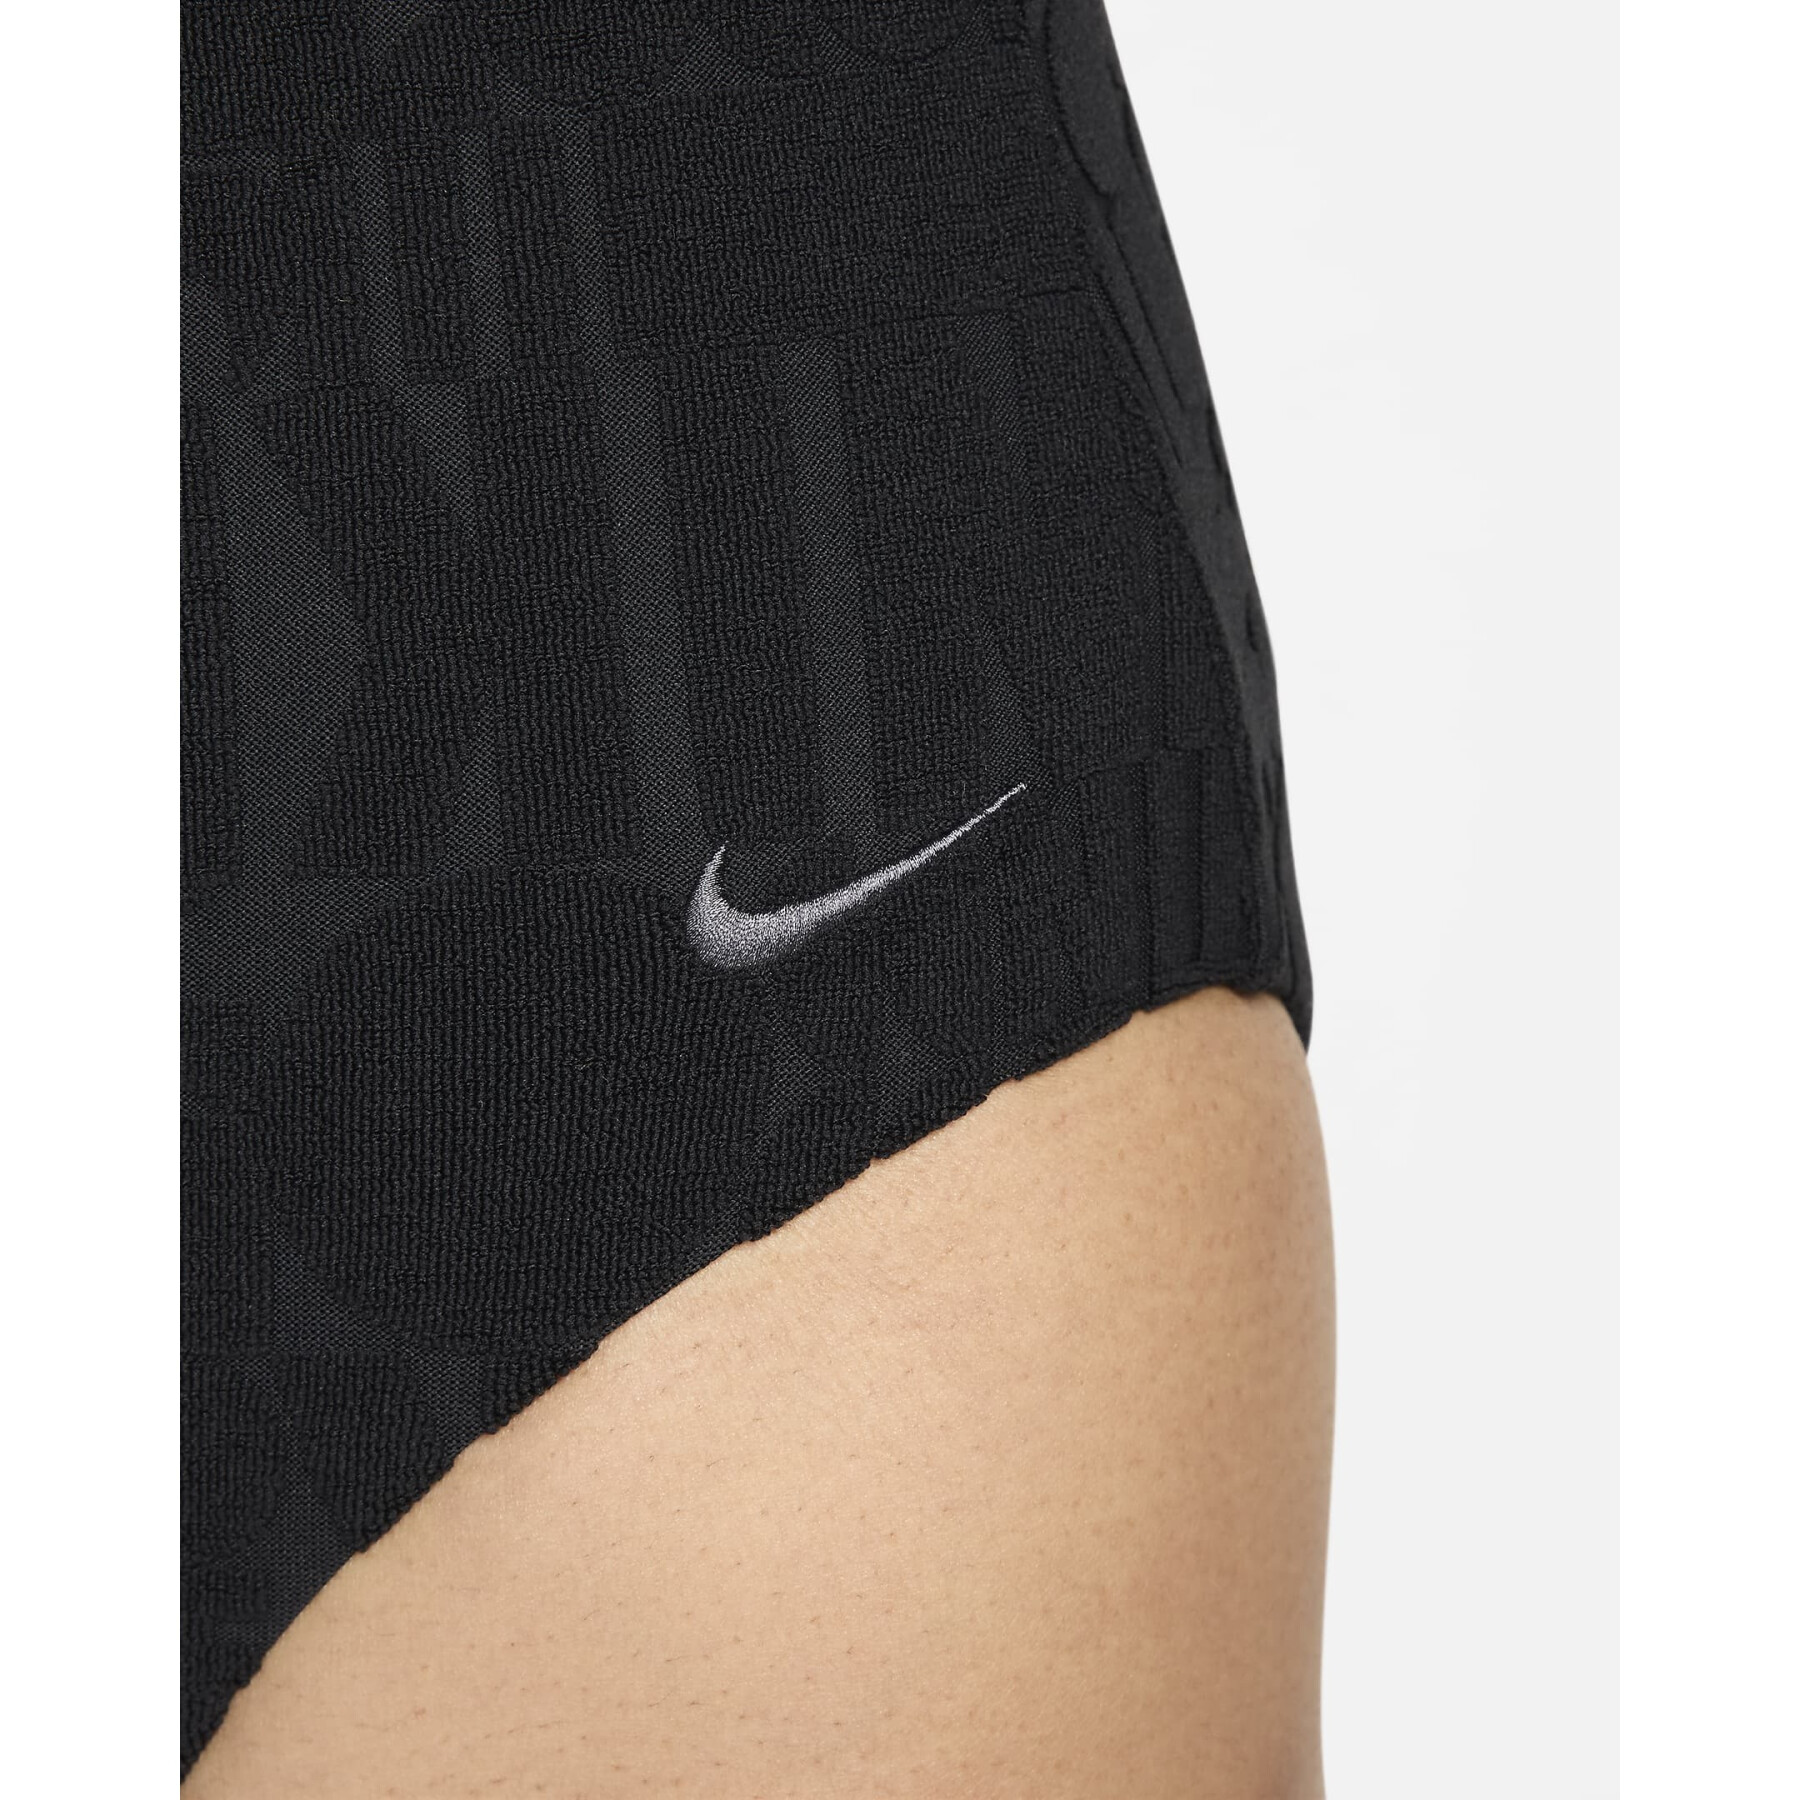 One-piece swimsuit for girls Nike Retro Flow